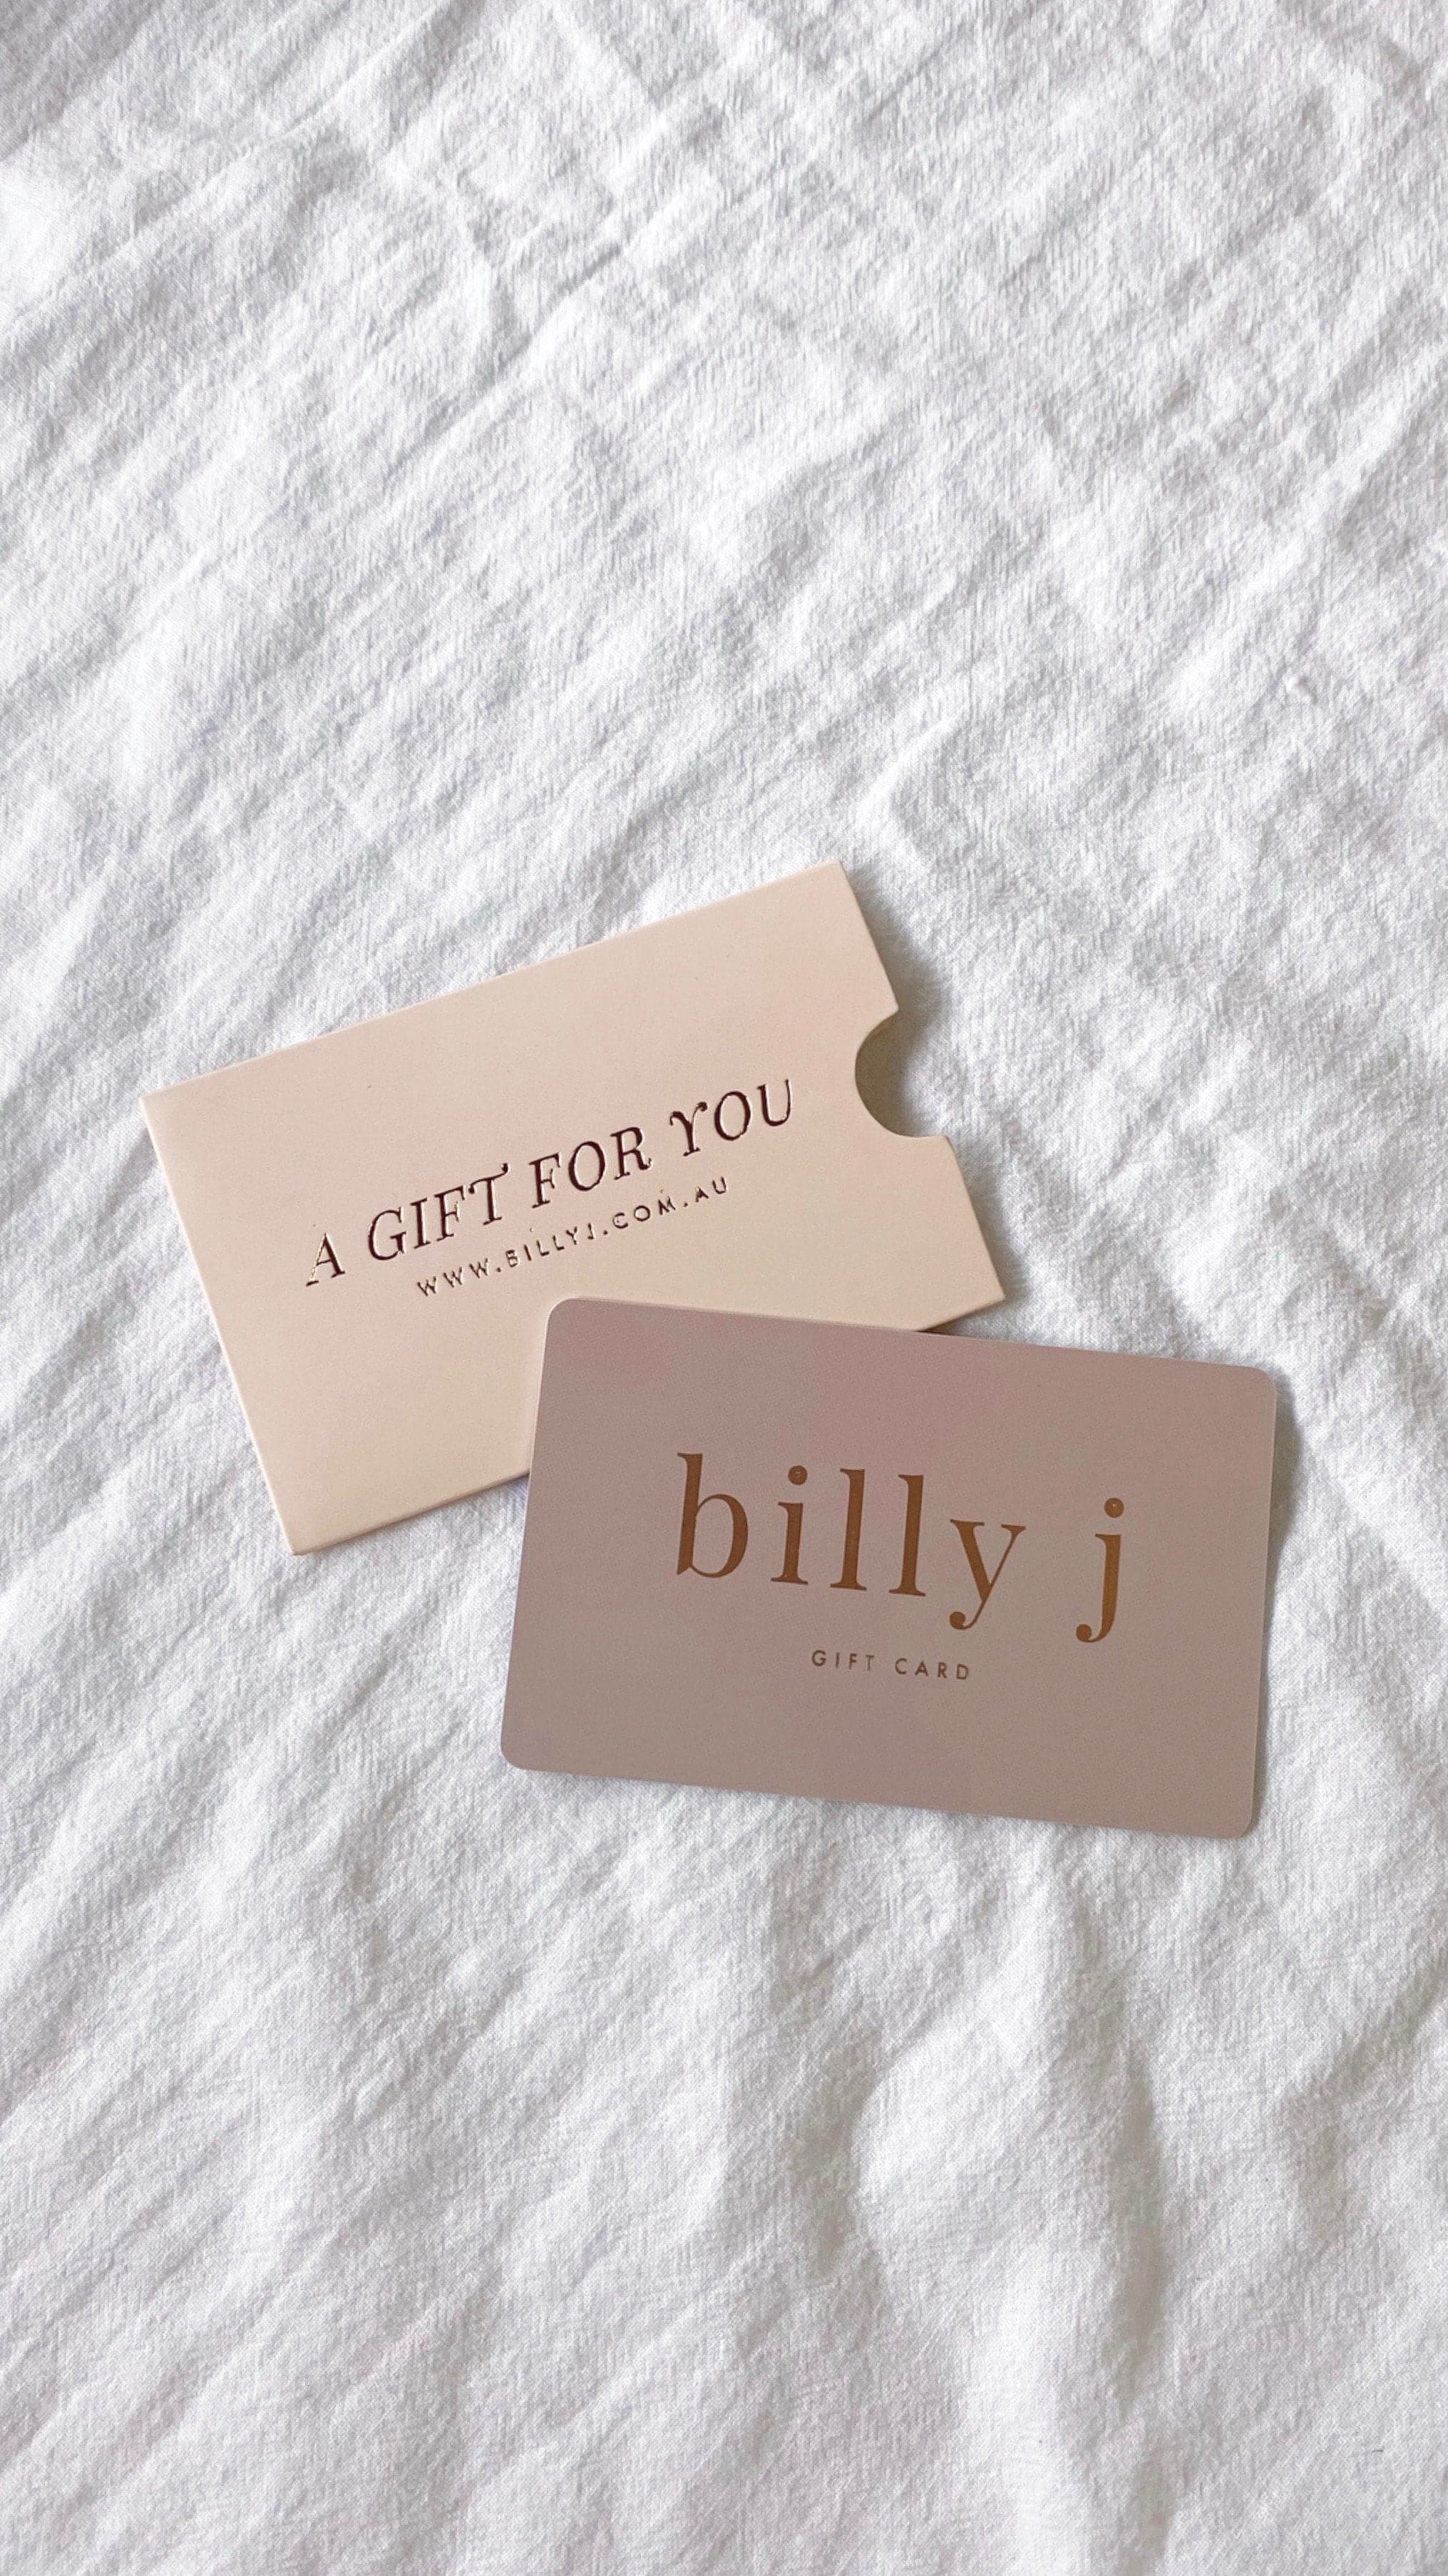 Gift Card - $50 - Billy J